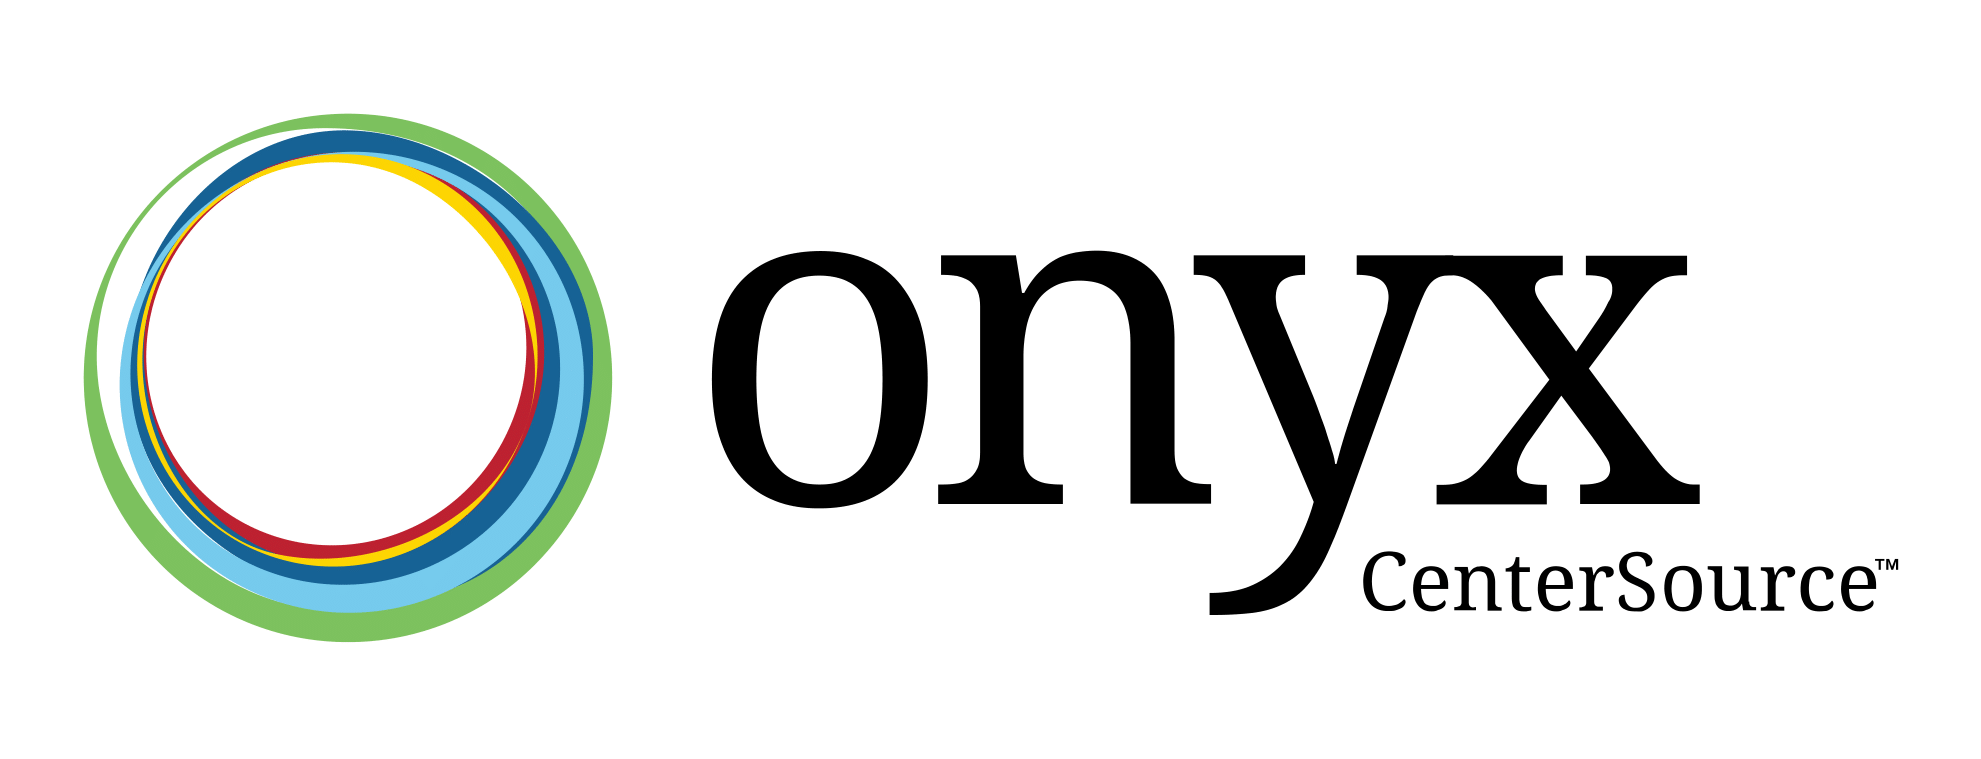  alt='Onyx CenterSource'  Title='Onyx CenterSource' 